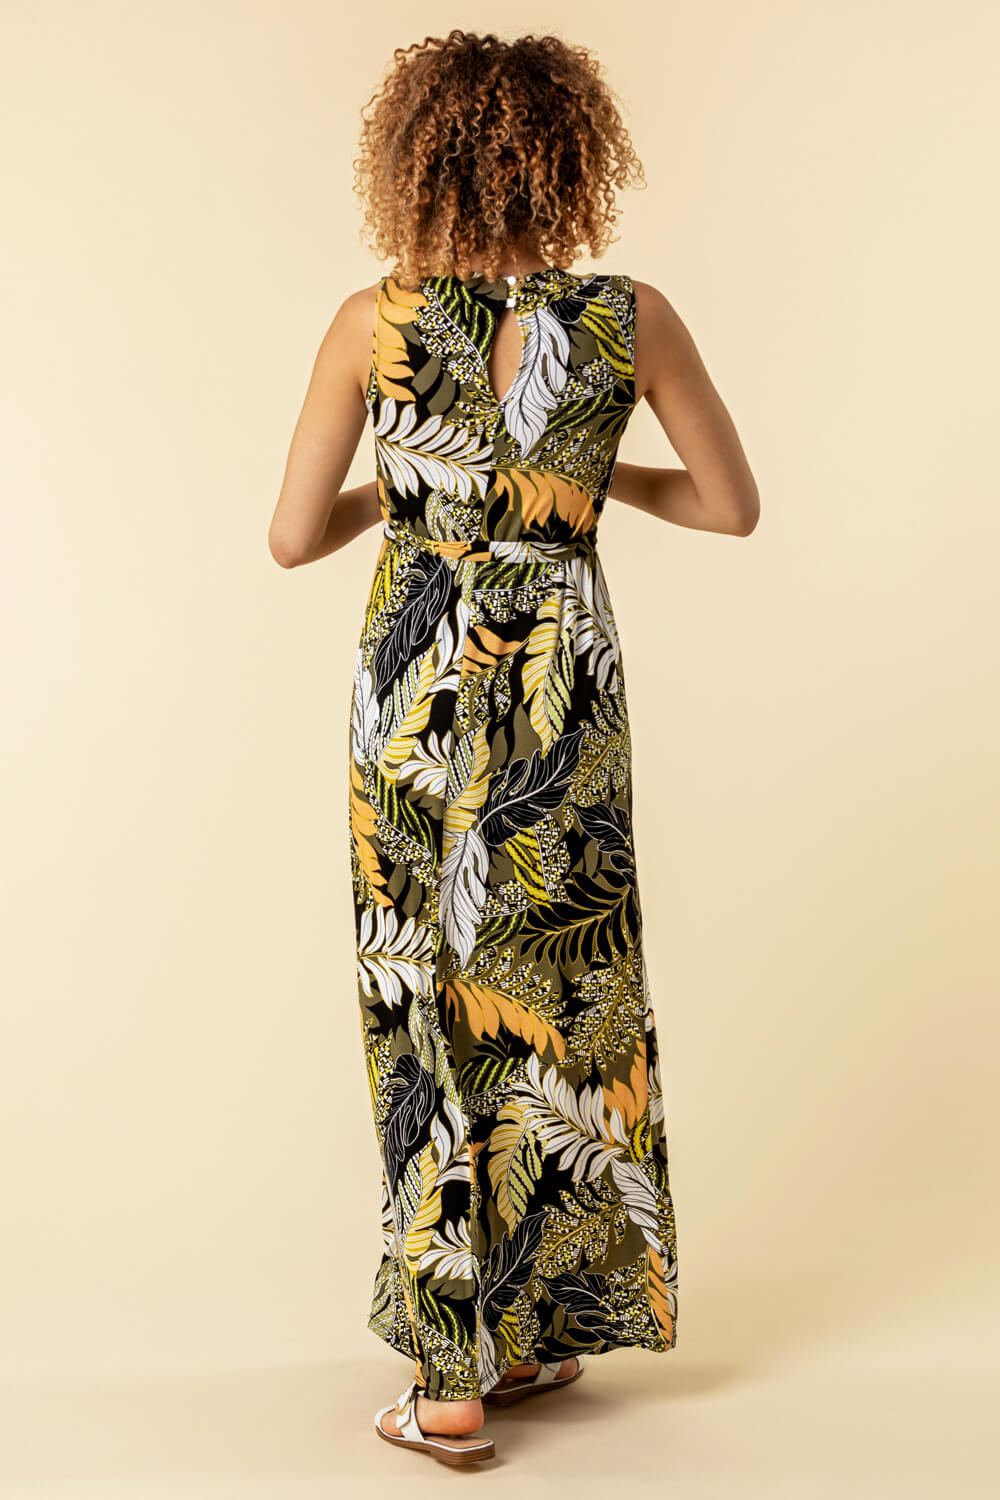 KHAKI Tropical Print Belted Maxi Dress, Image 2 of 4